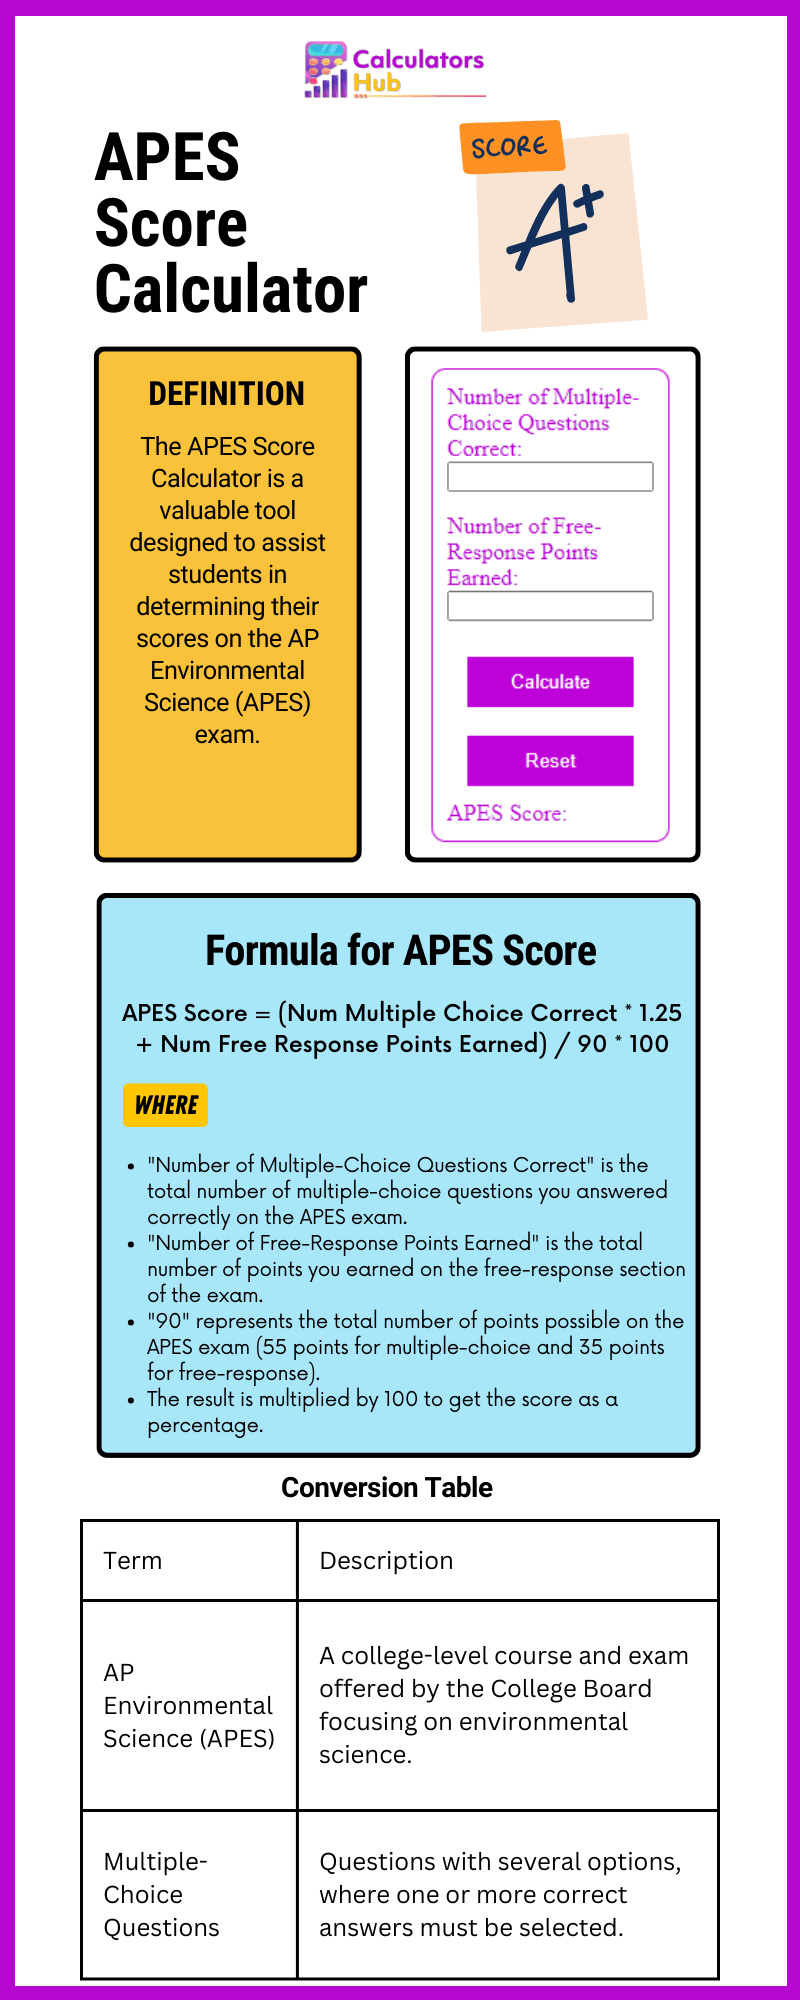 APES Score Calculator